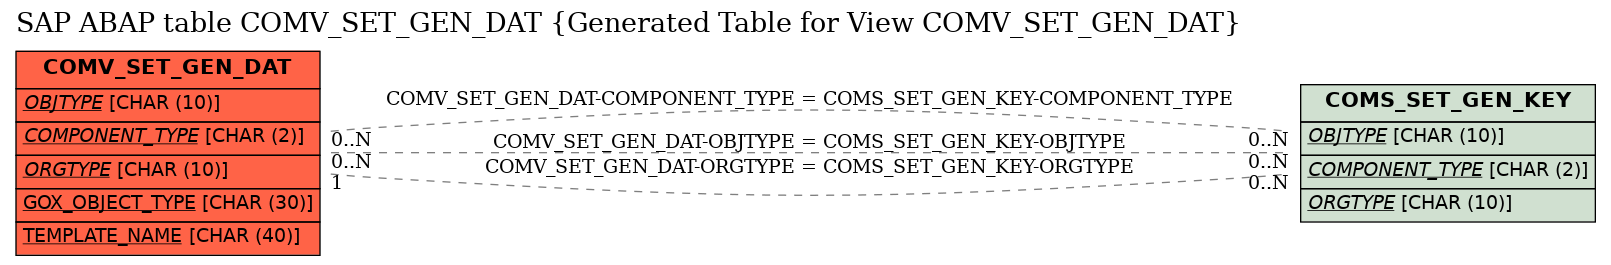 E-R Diagram for table COMV_SET_GEN_DAT (Generated Table for View COMV_SET_GEN_DAT)